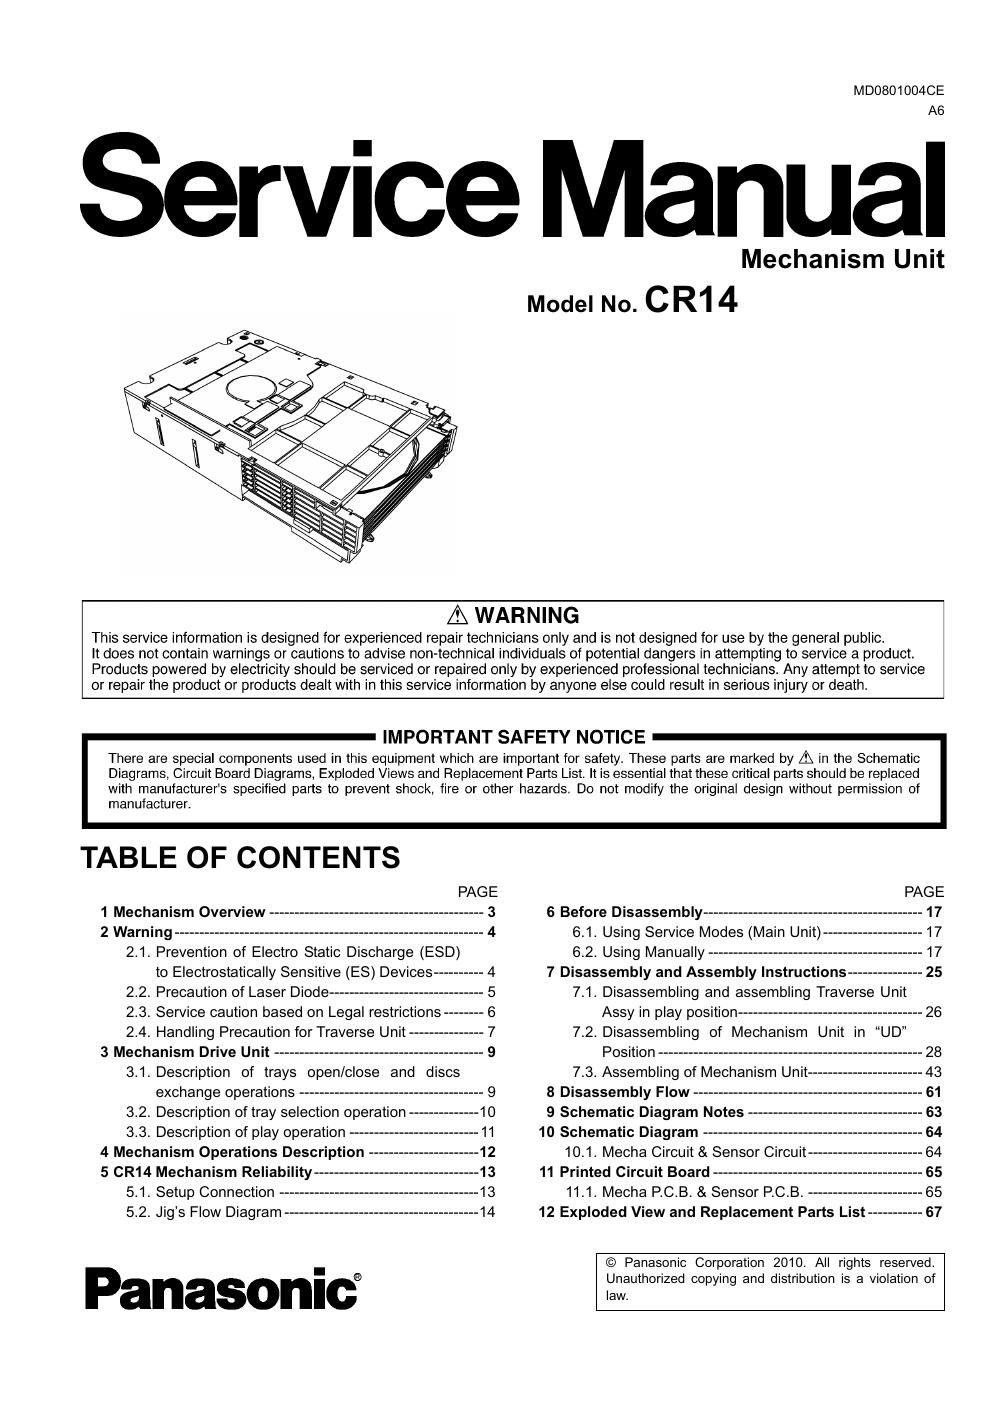 panasonic cr 14 service manual